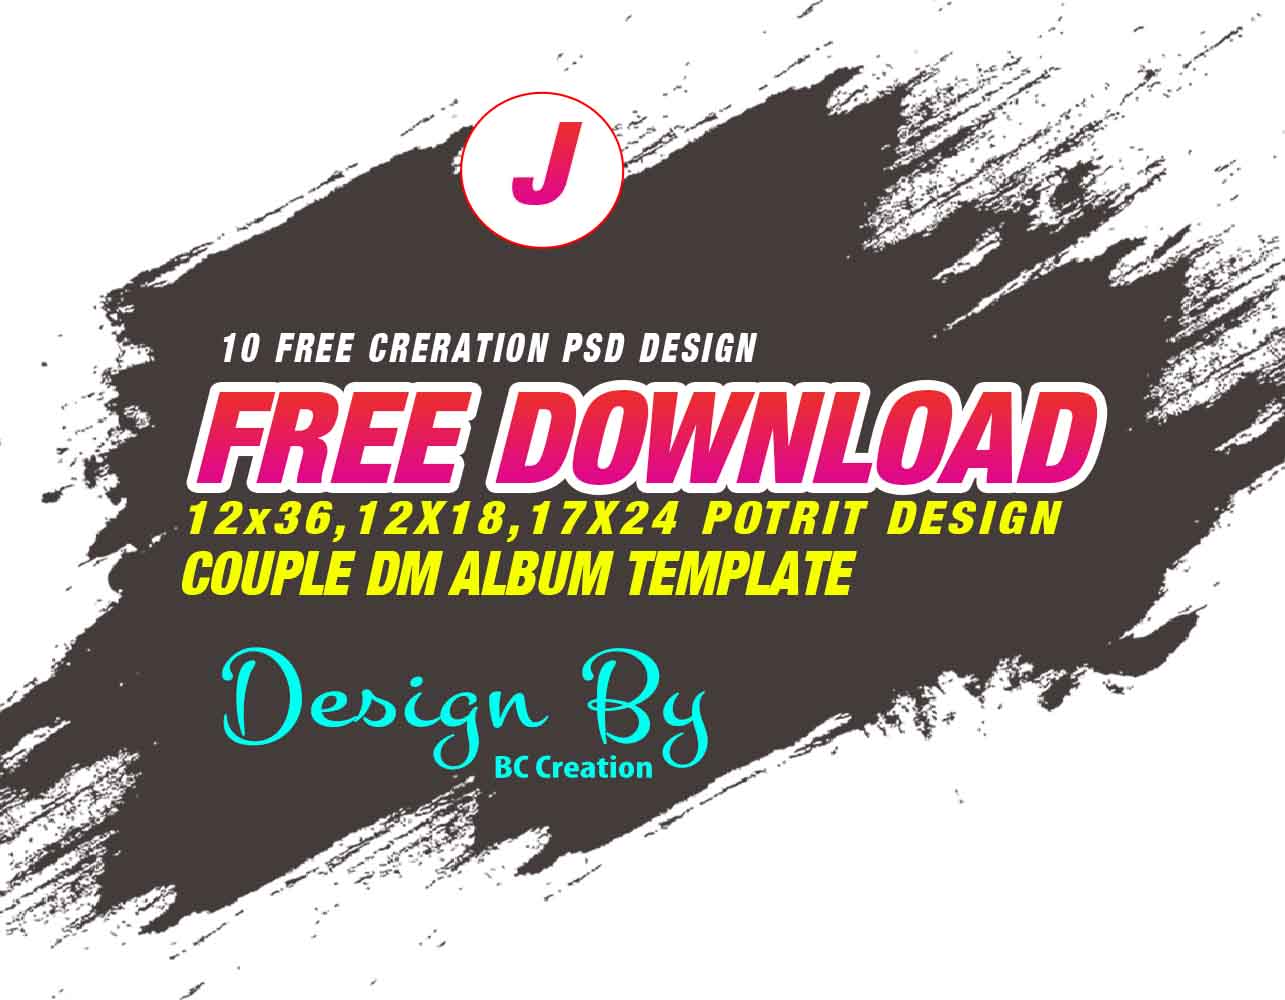 12x36 album cover psd free download,